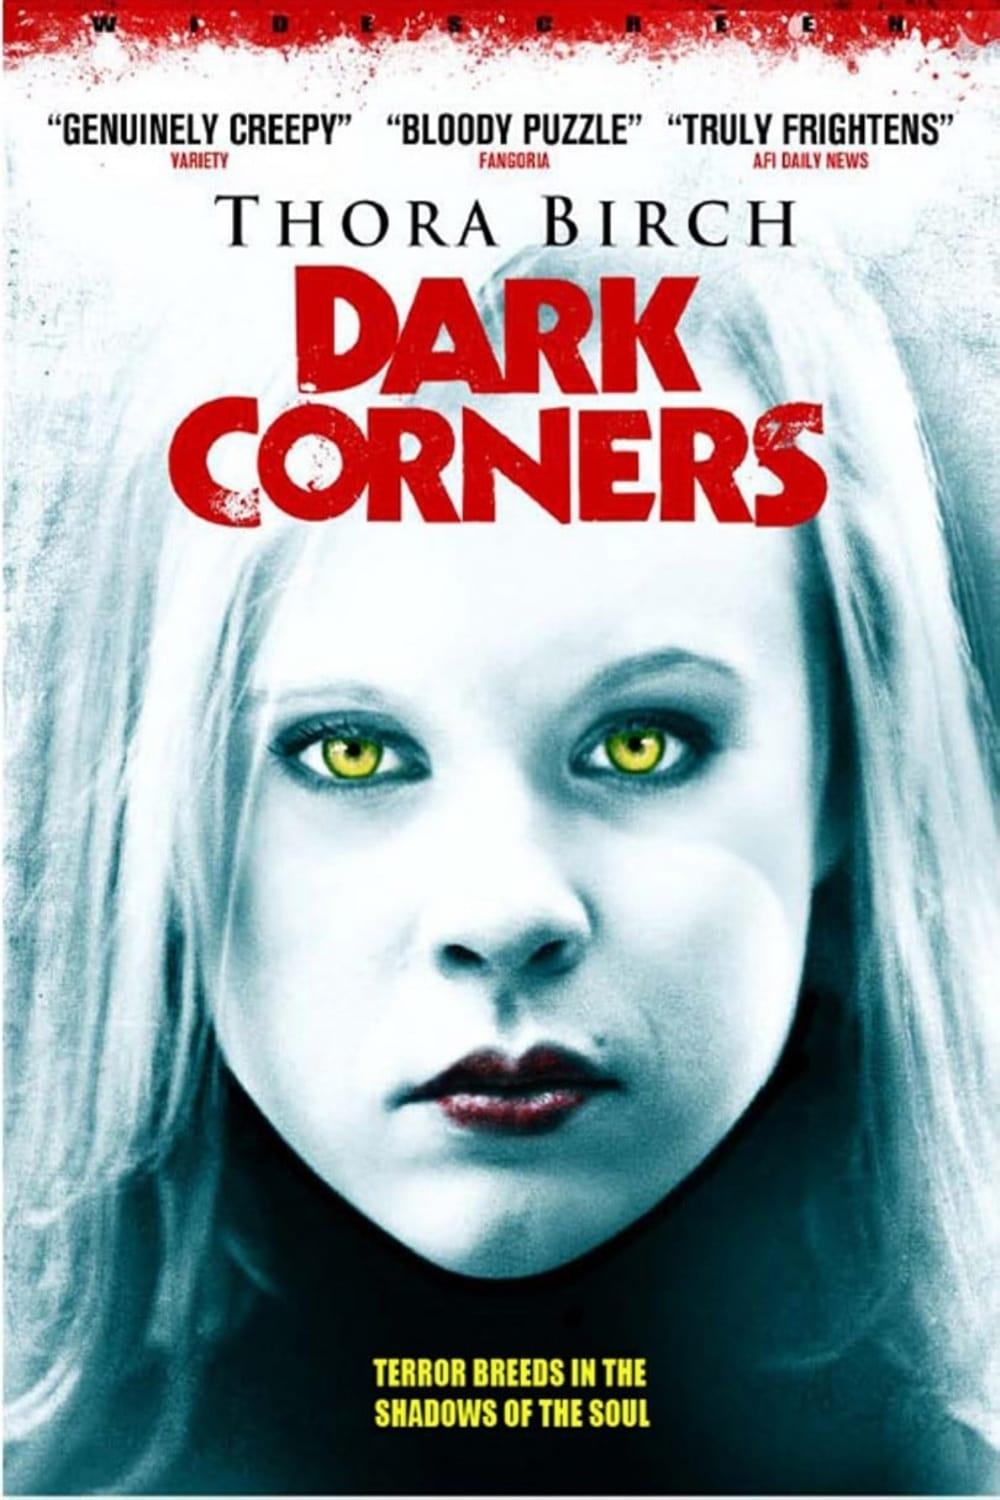 Dark Corners poster